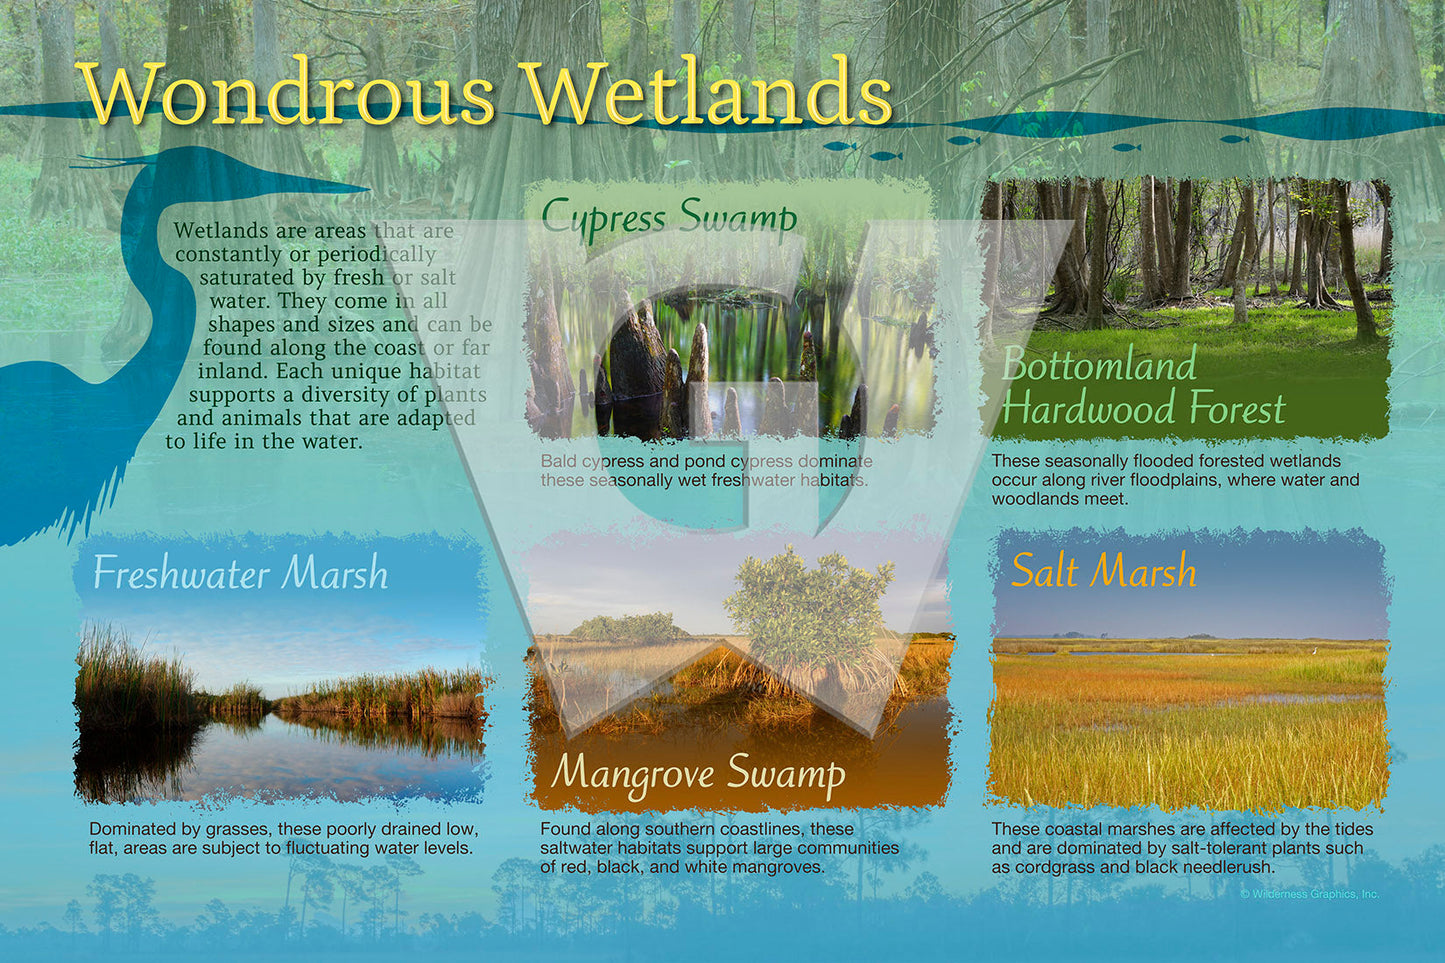 Wondrous Wetlands